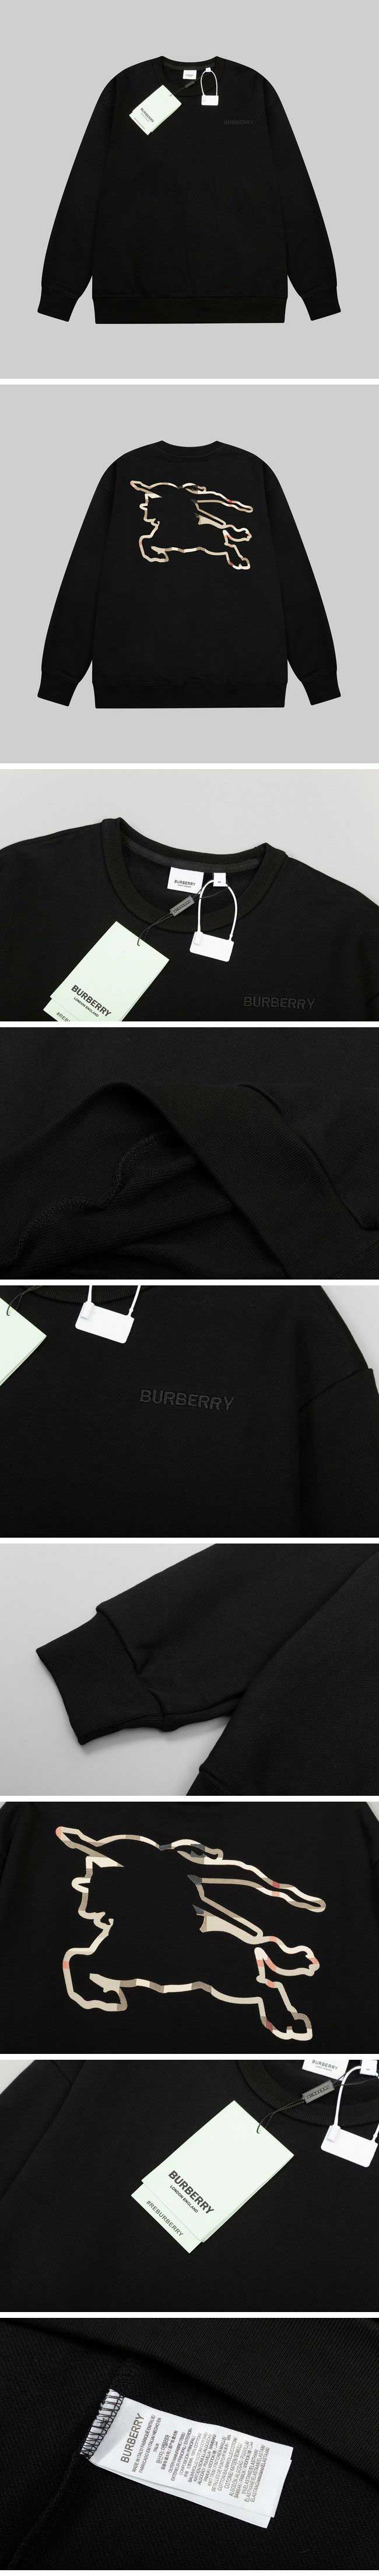 Burberry Silhouette Sorse Print Sweat バーバリー シルエット ホース プリント スウェット ブラック